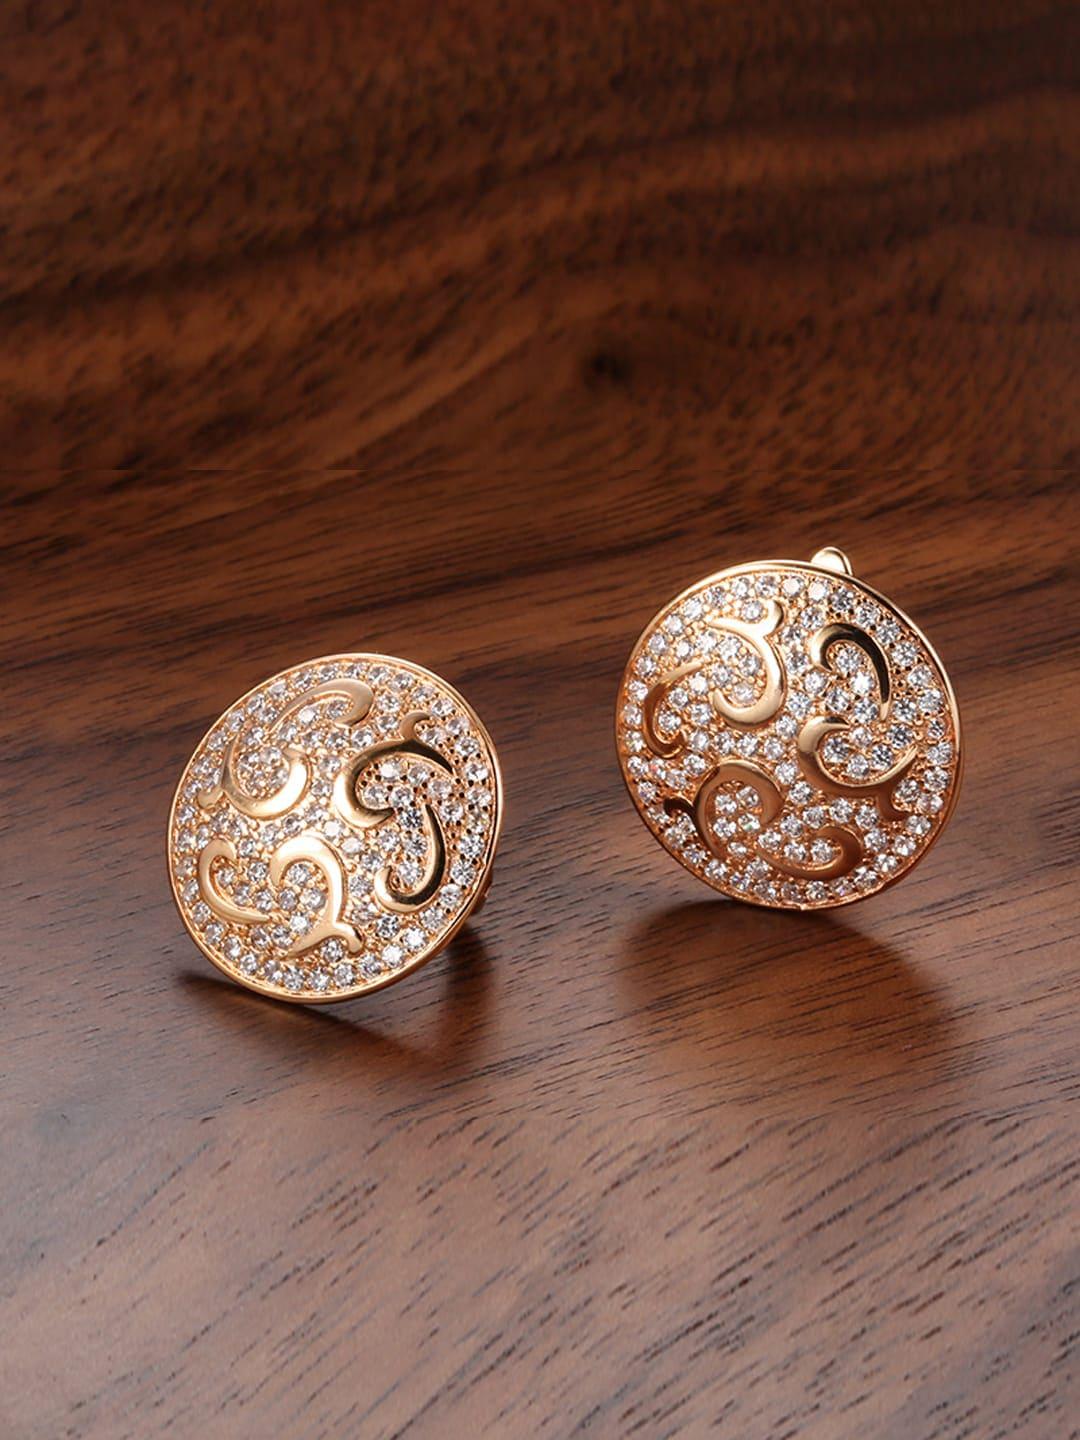 shining diva fashion 18k rose gold-plated & white circular studs earrings